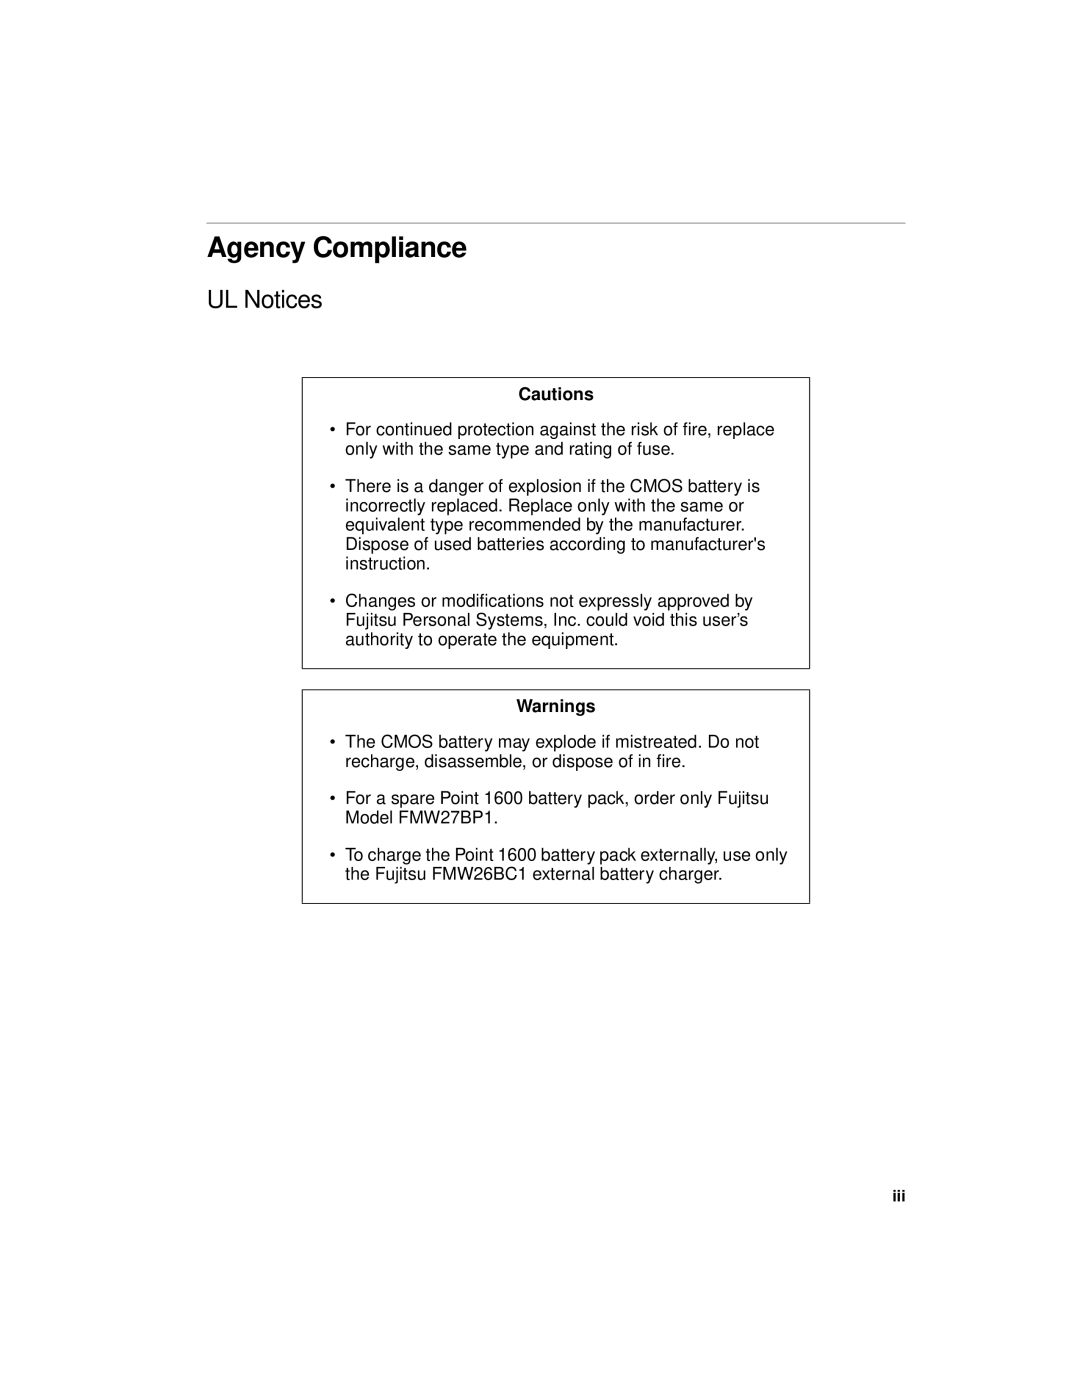 Fujitsu 1600 manual Agency Compliance, UL Notices, Cautions, Warnings 